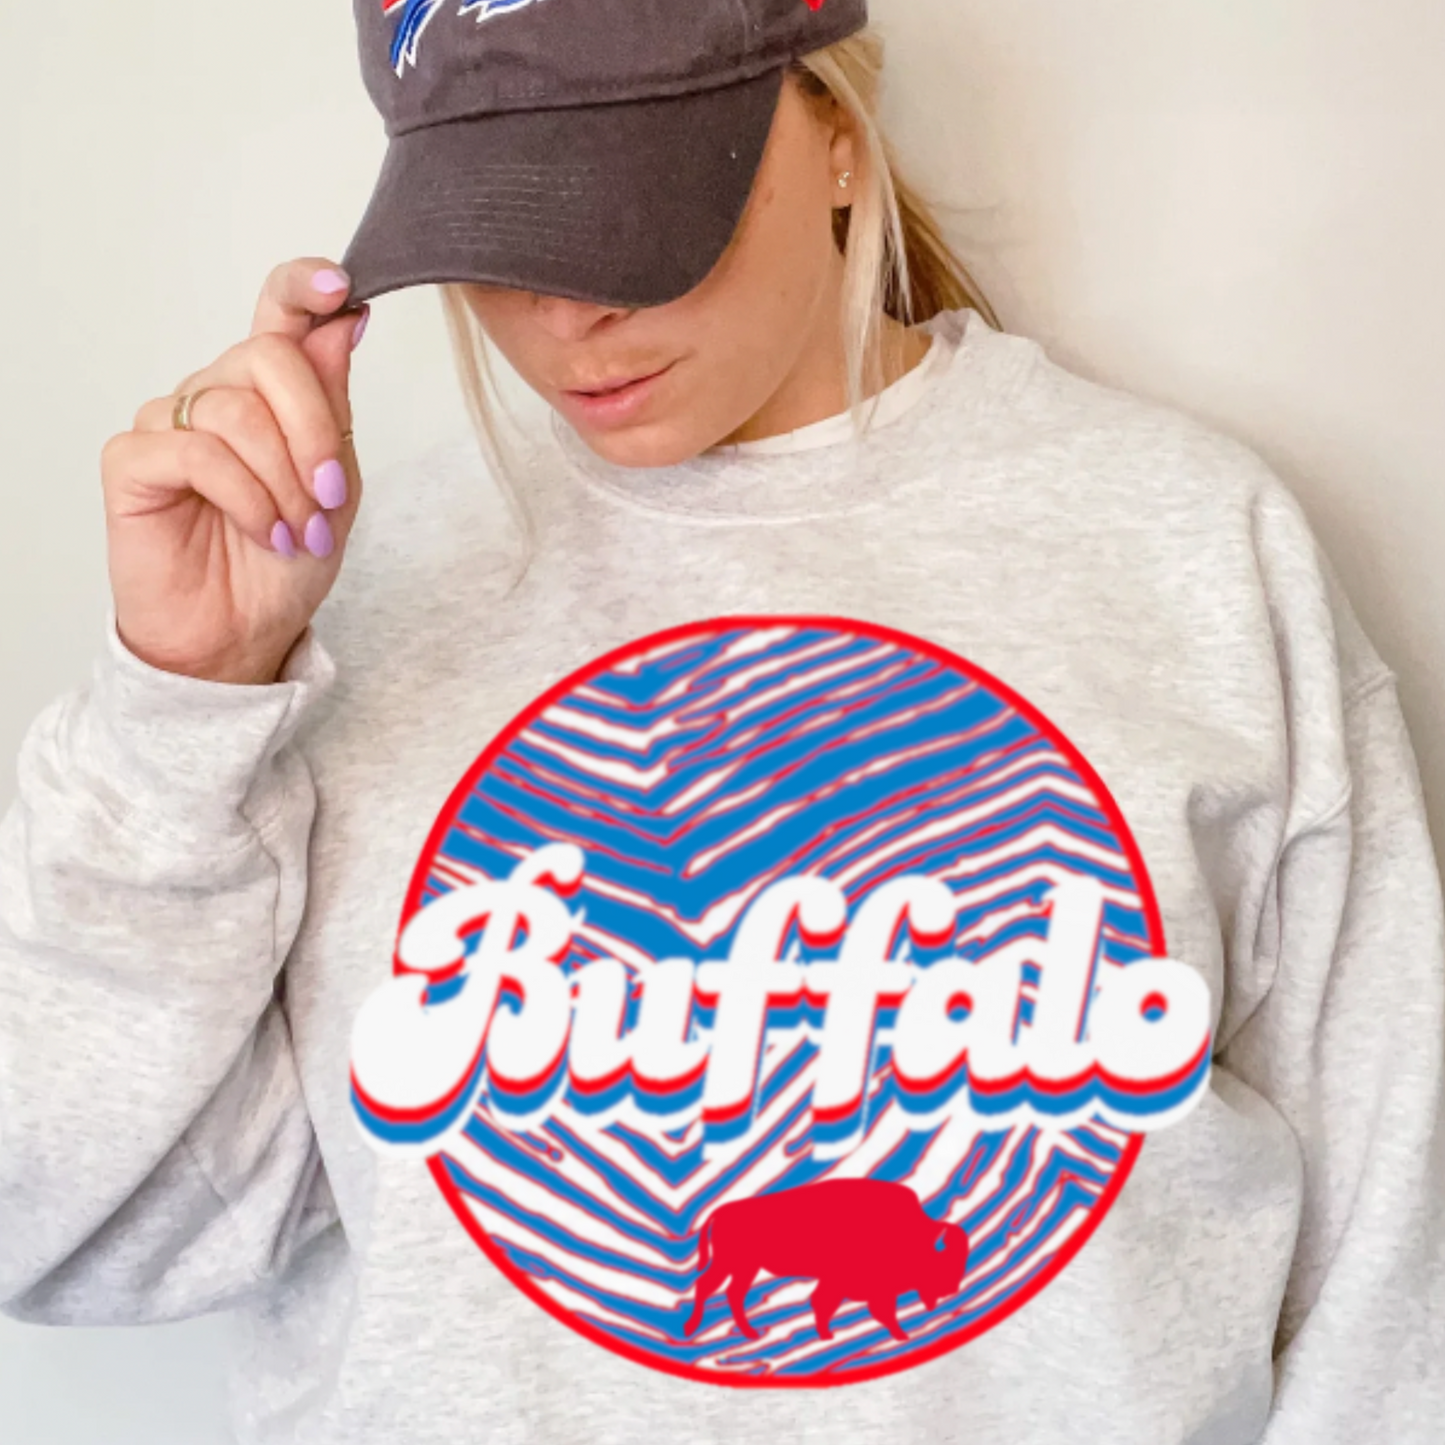 Buffalo Football Zubaz Old School Sweatshirt